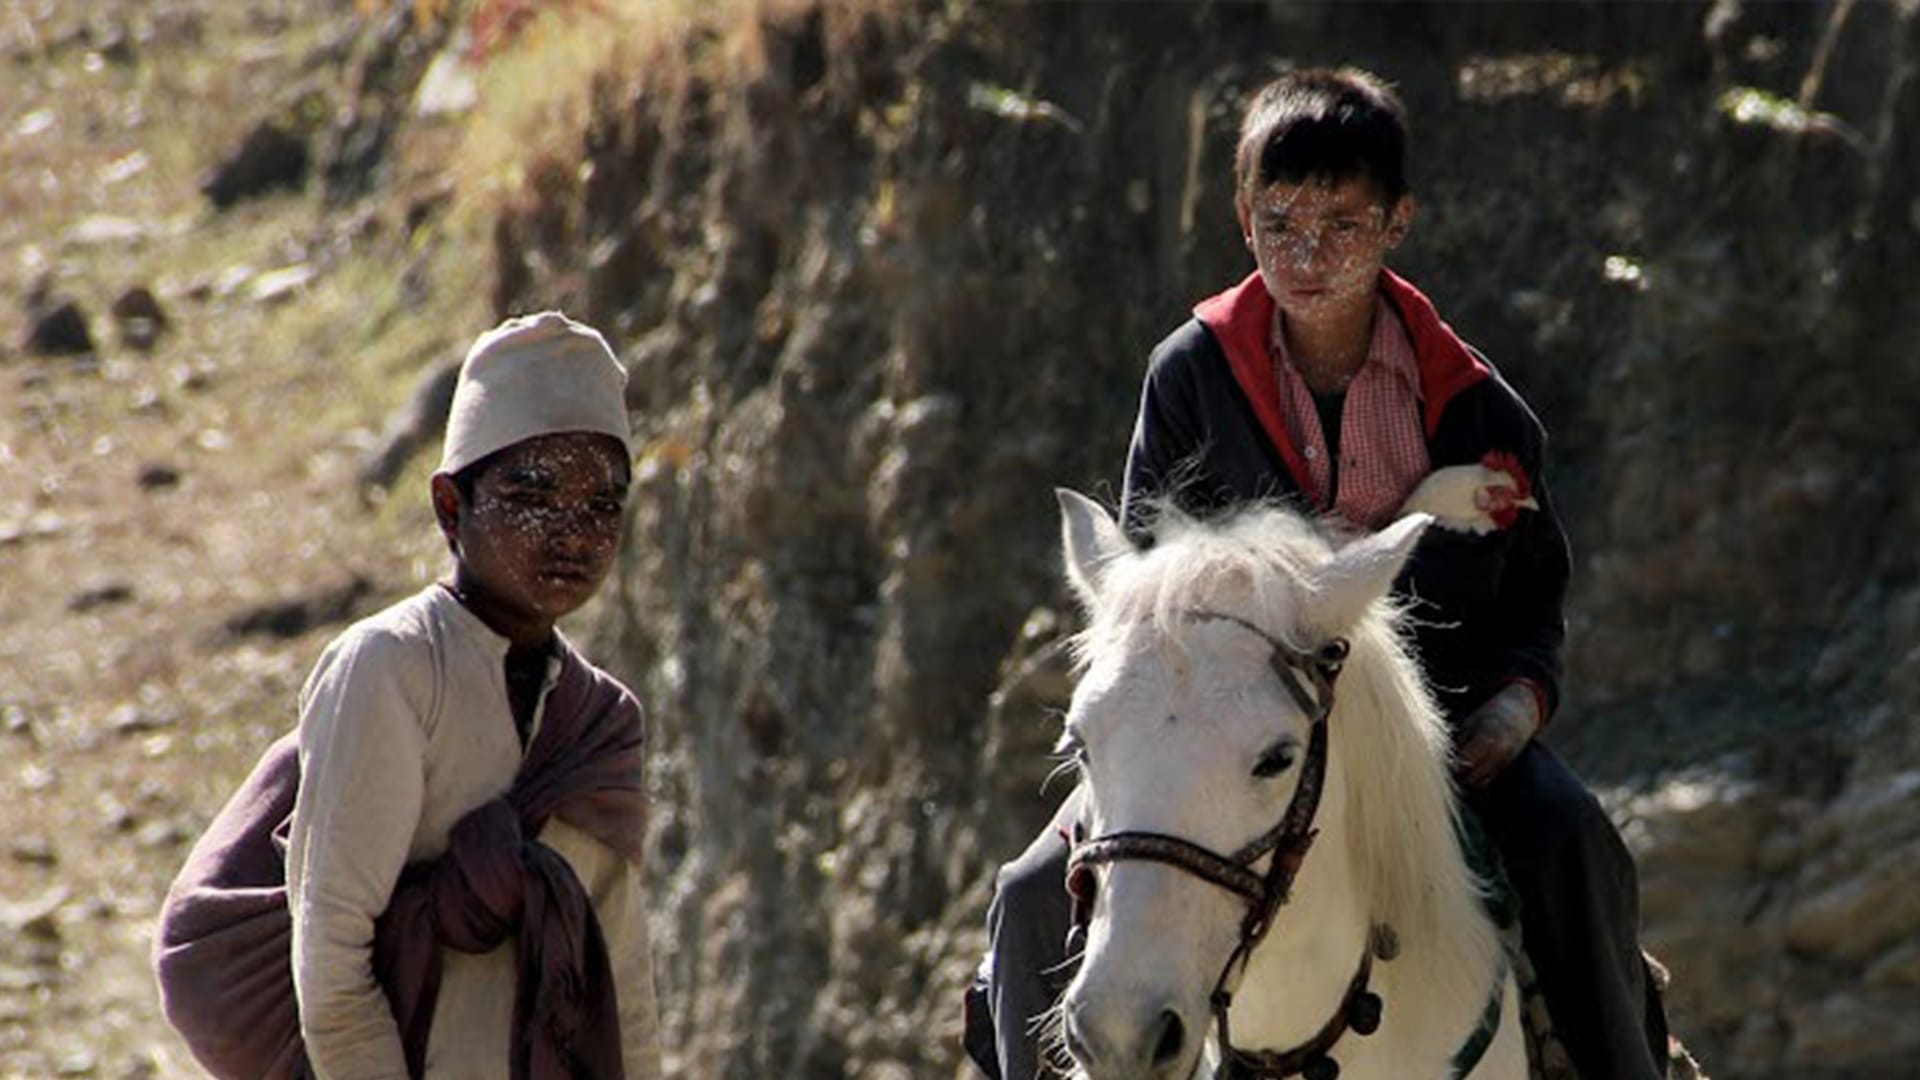 Image du film Kalo pothi, un village au Népal yqnwifllnac9r3y51w3pqxen8mbjpg